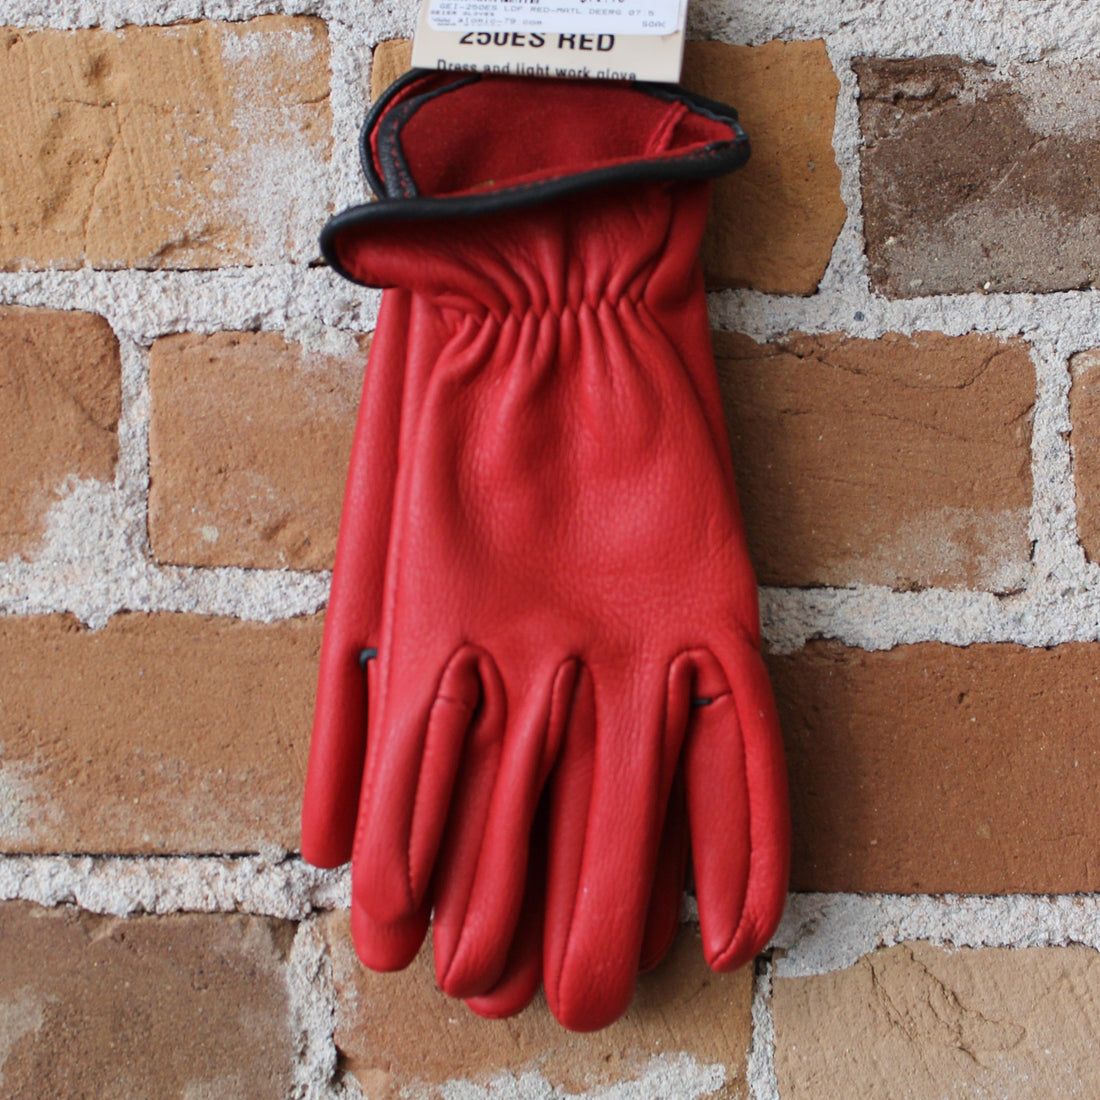 Nordic Fleece Lined Deerskin Work Gloves In Red view of gloves